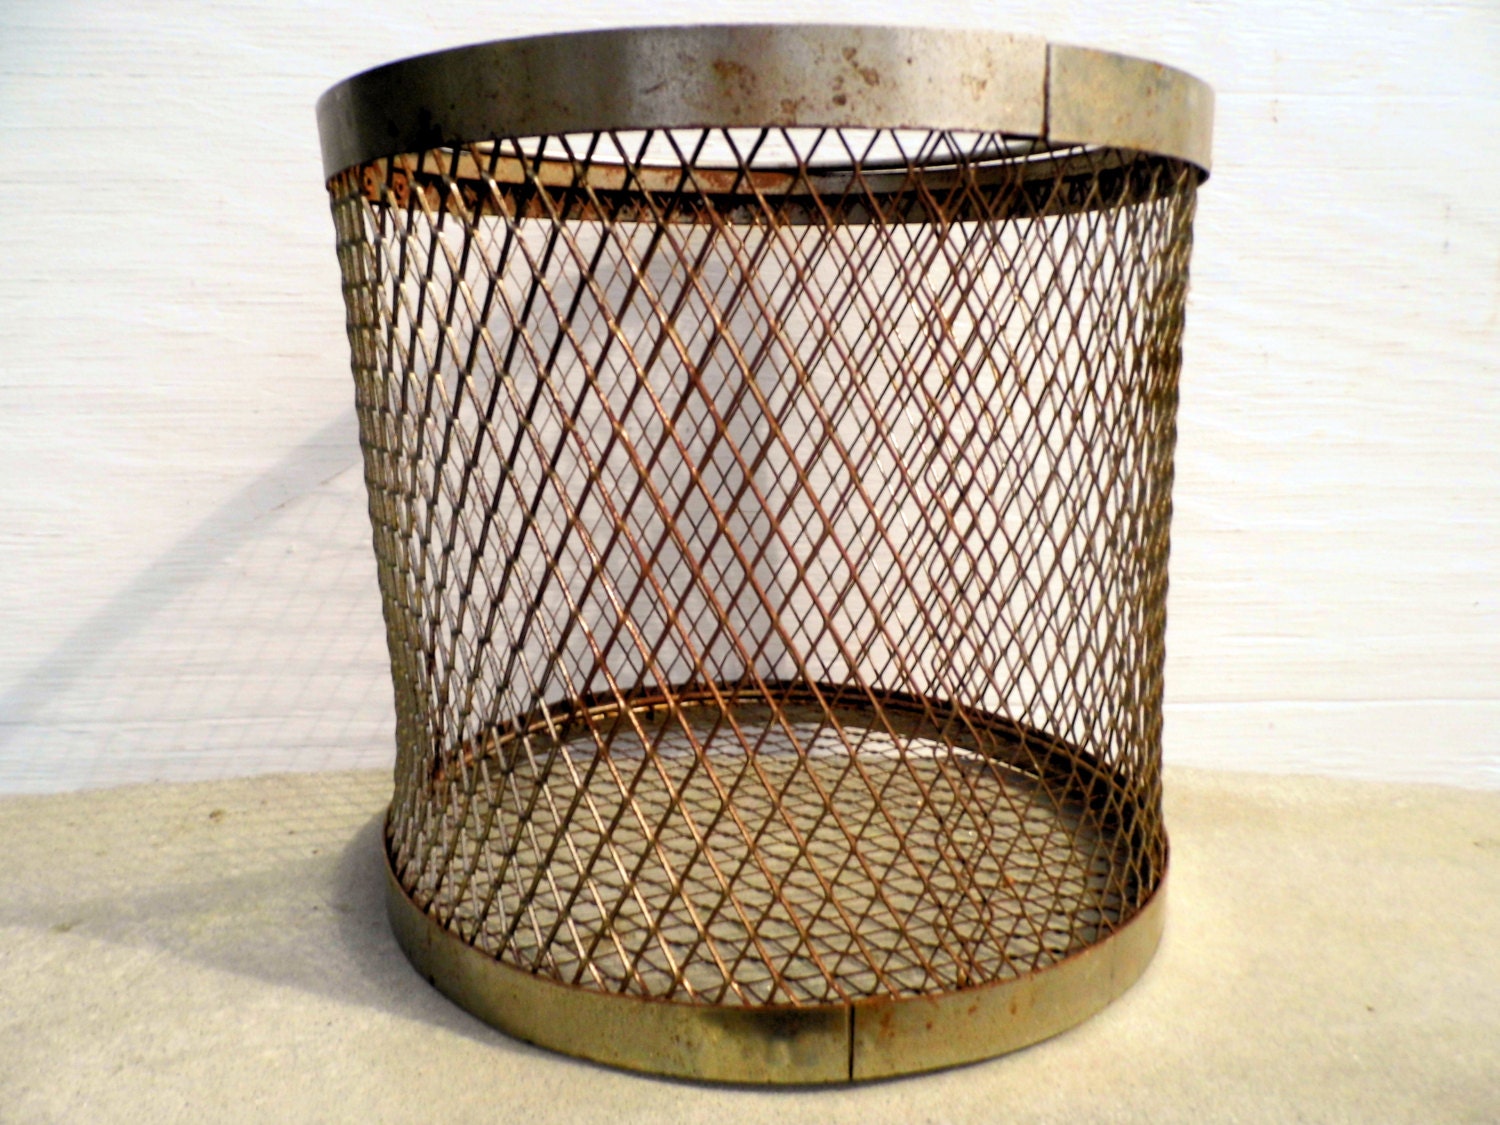 industrial wire baskets